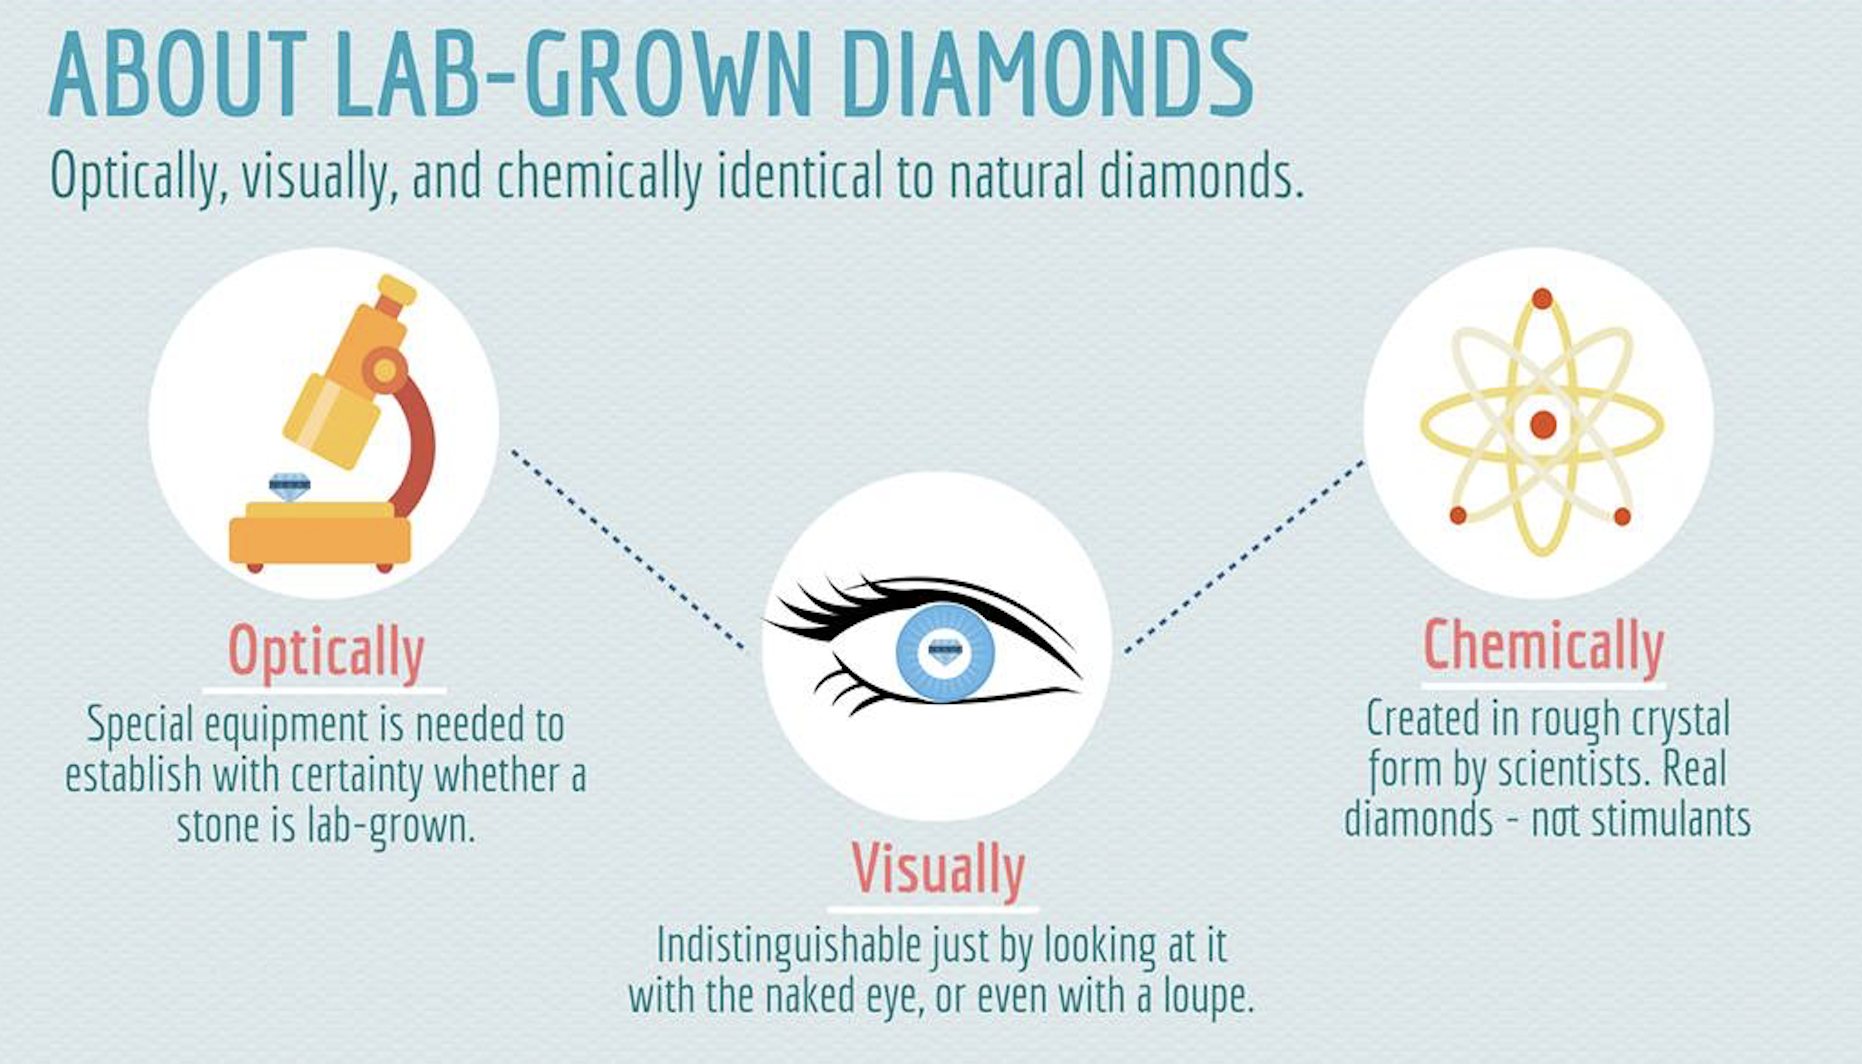 [INFOGRAPHIC] The basics of lab-grown diamonds